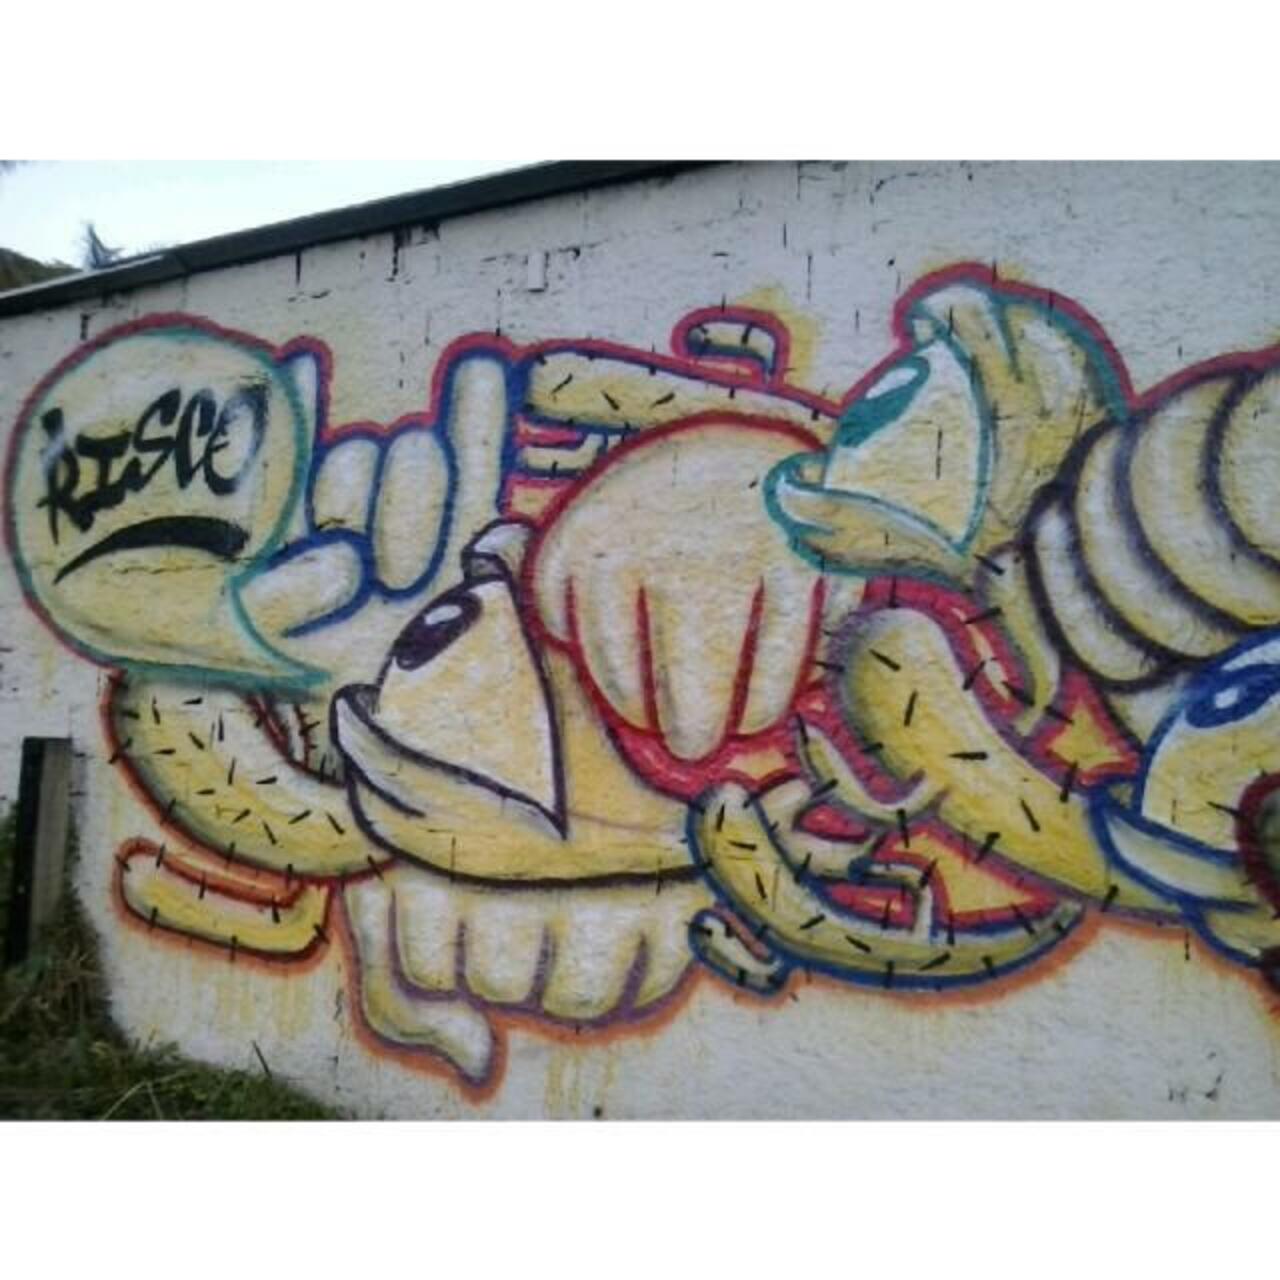 #riscocrew #streetartrio #graffiti #streetart by diegoazeredoo http://t.co/DdX8LtezbN